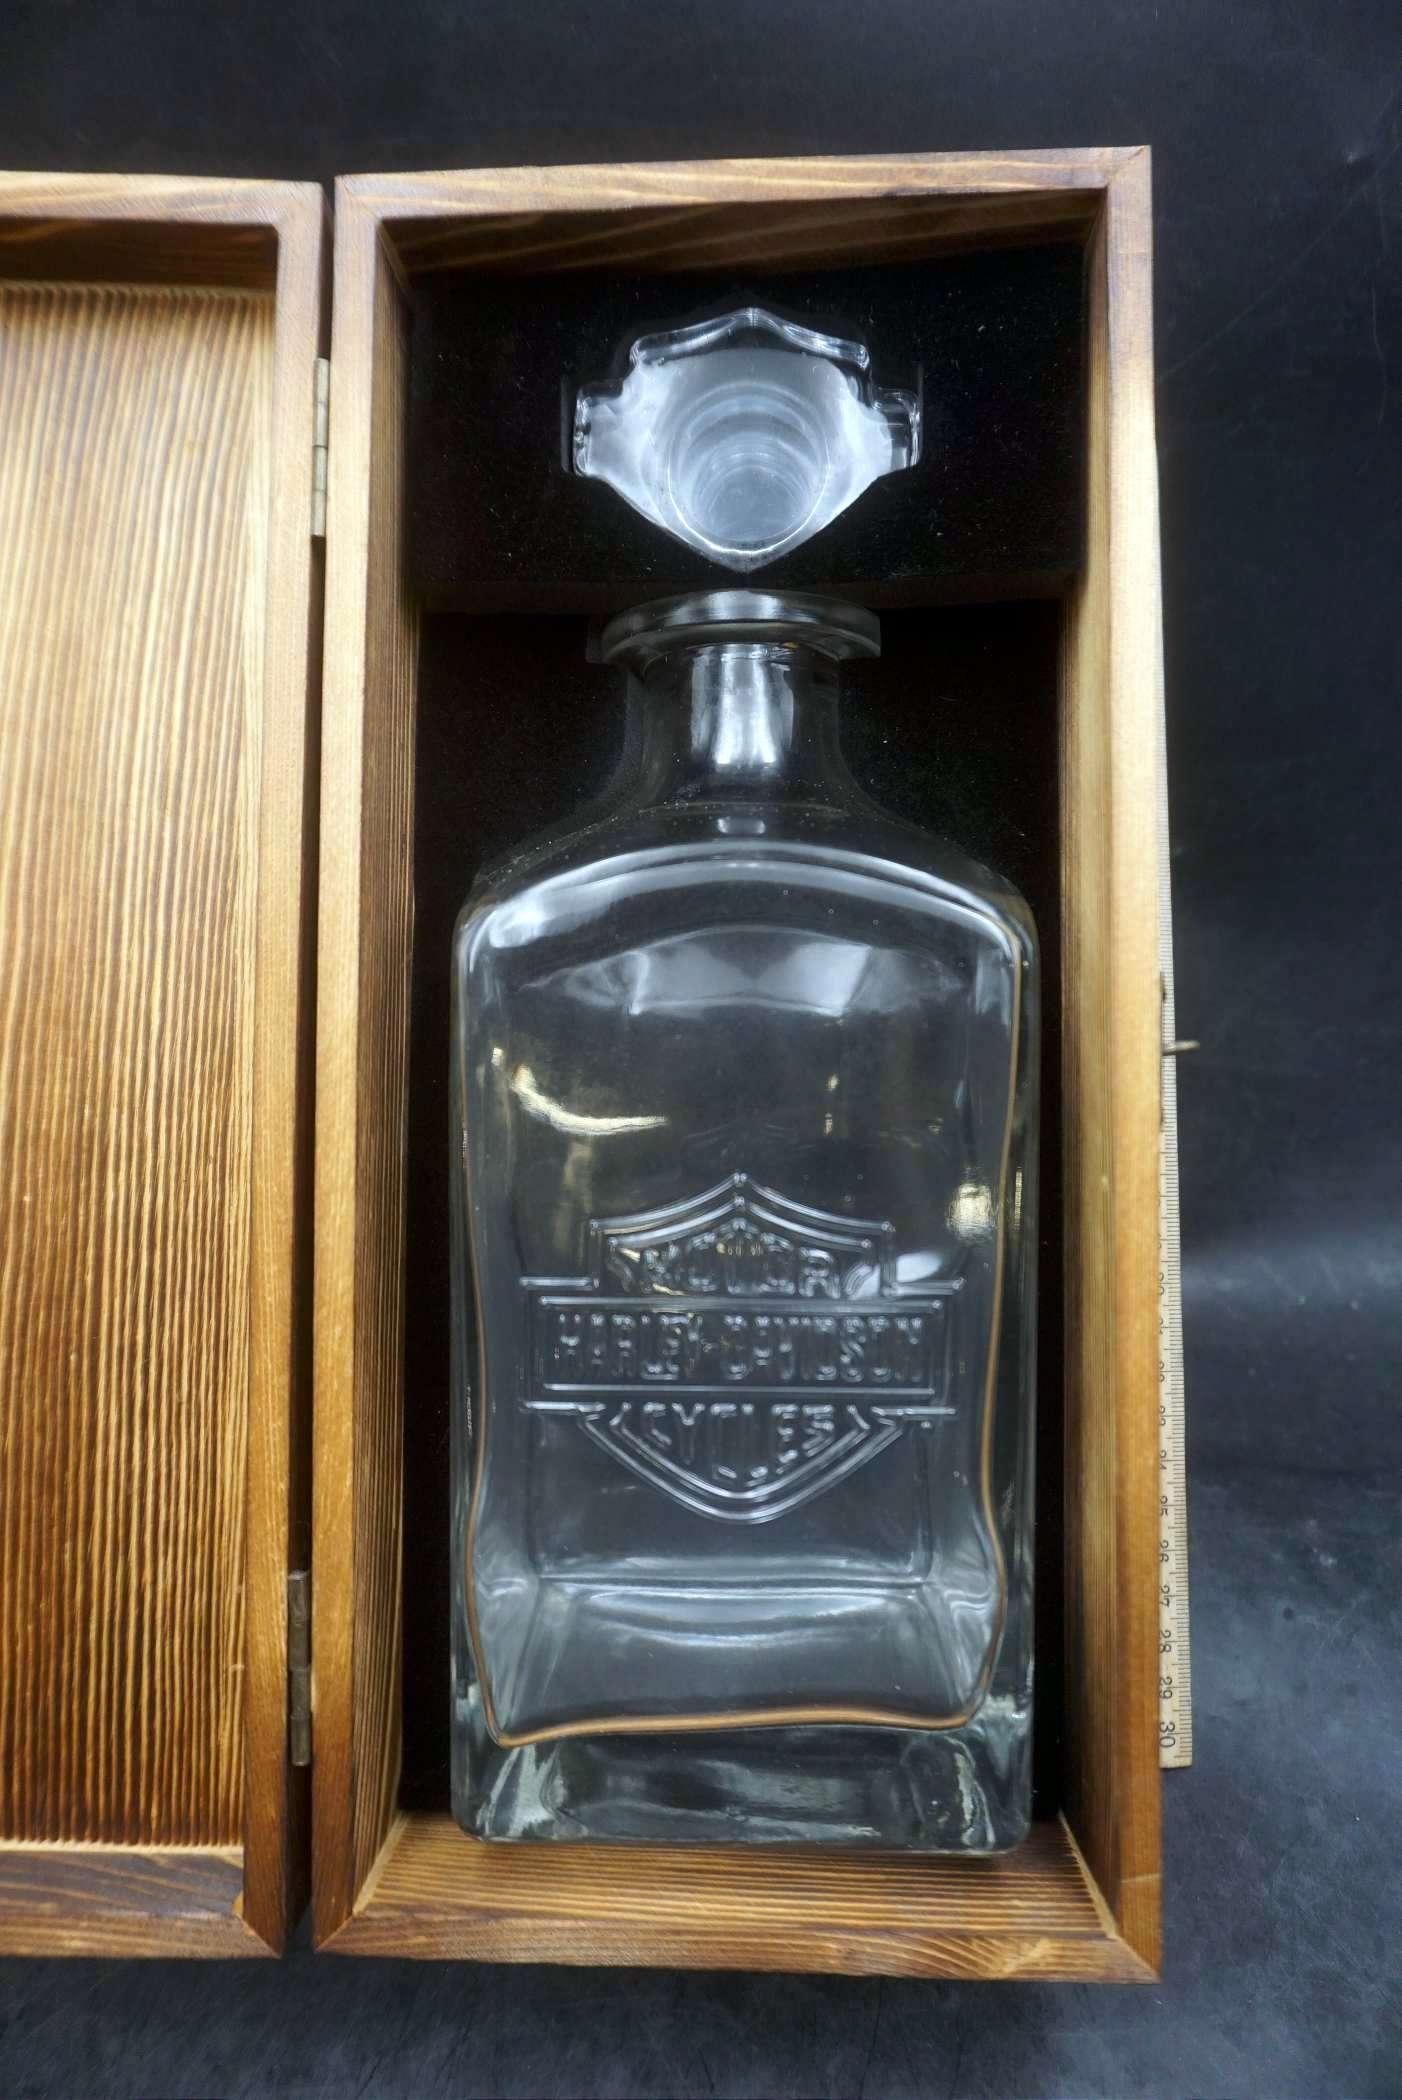 Harley-Davidson Glass Liquor Decanter Bottle In Wooden Case - J.L. Sioux Falls, S.D.